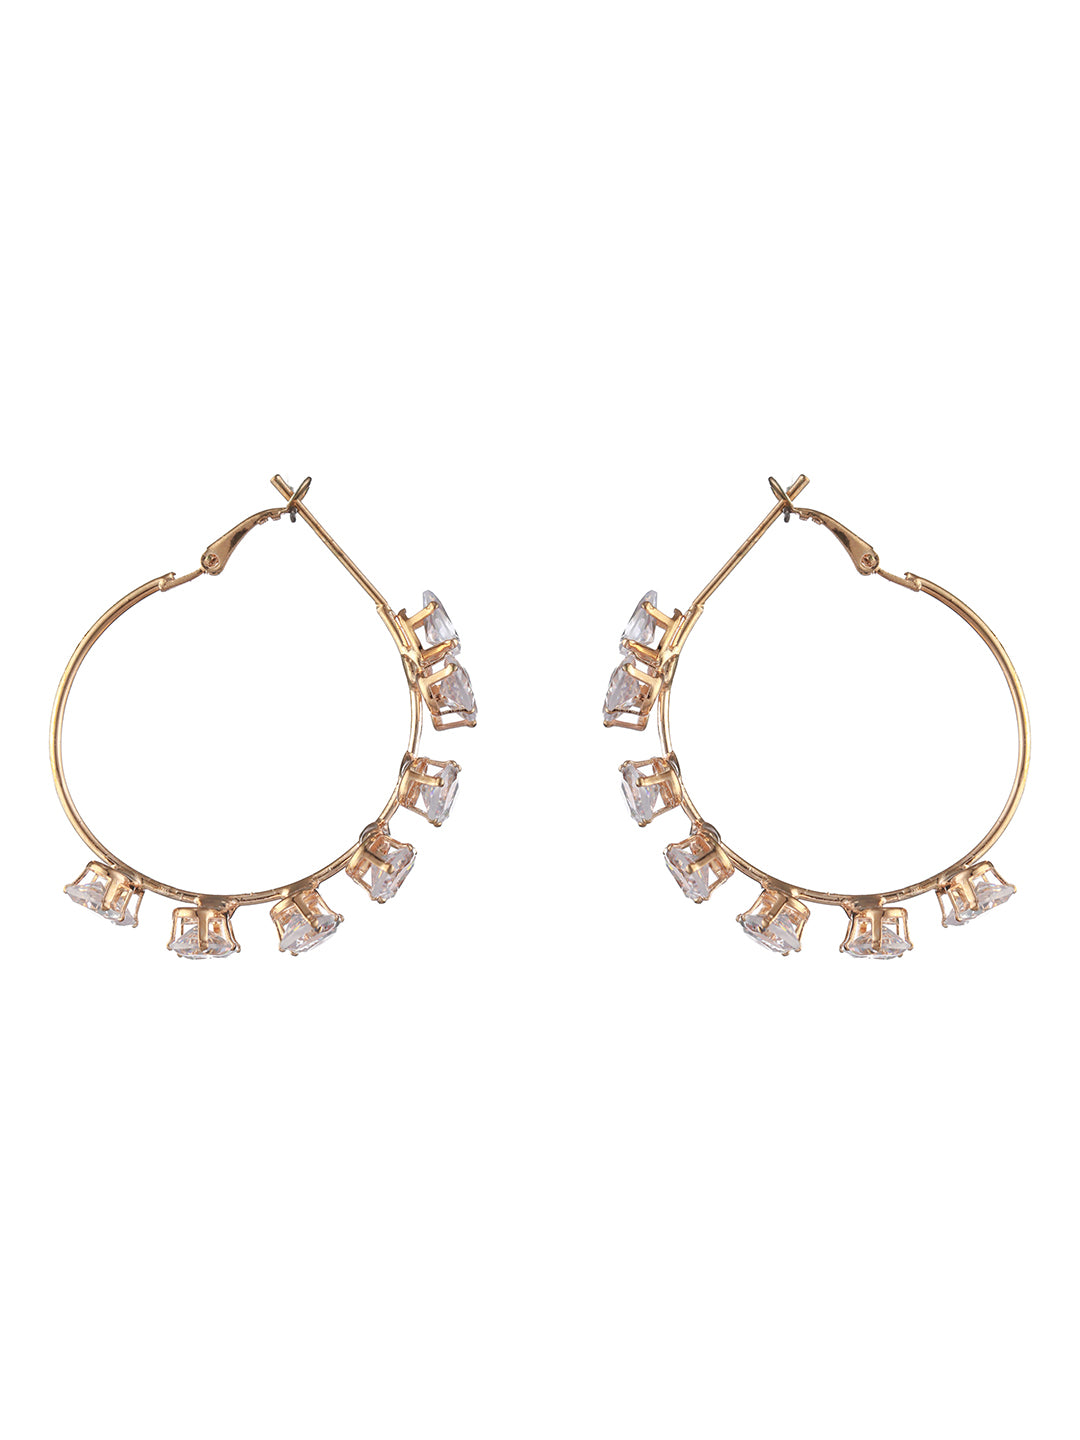 Stylish American Diamond Rose Gold-Plated Hoop Earrings